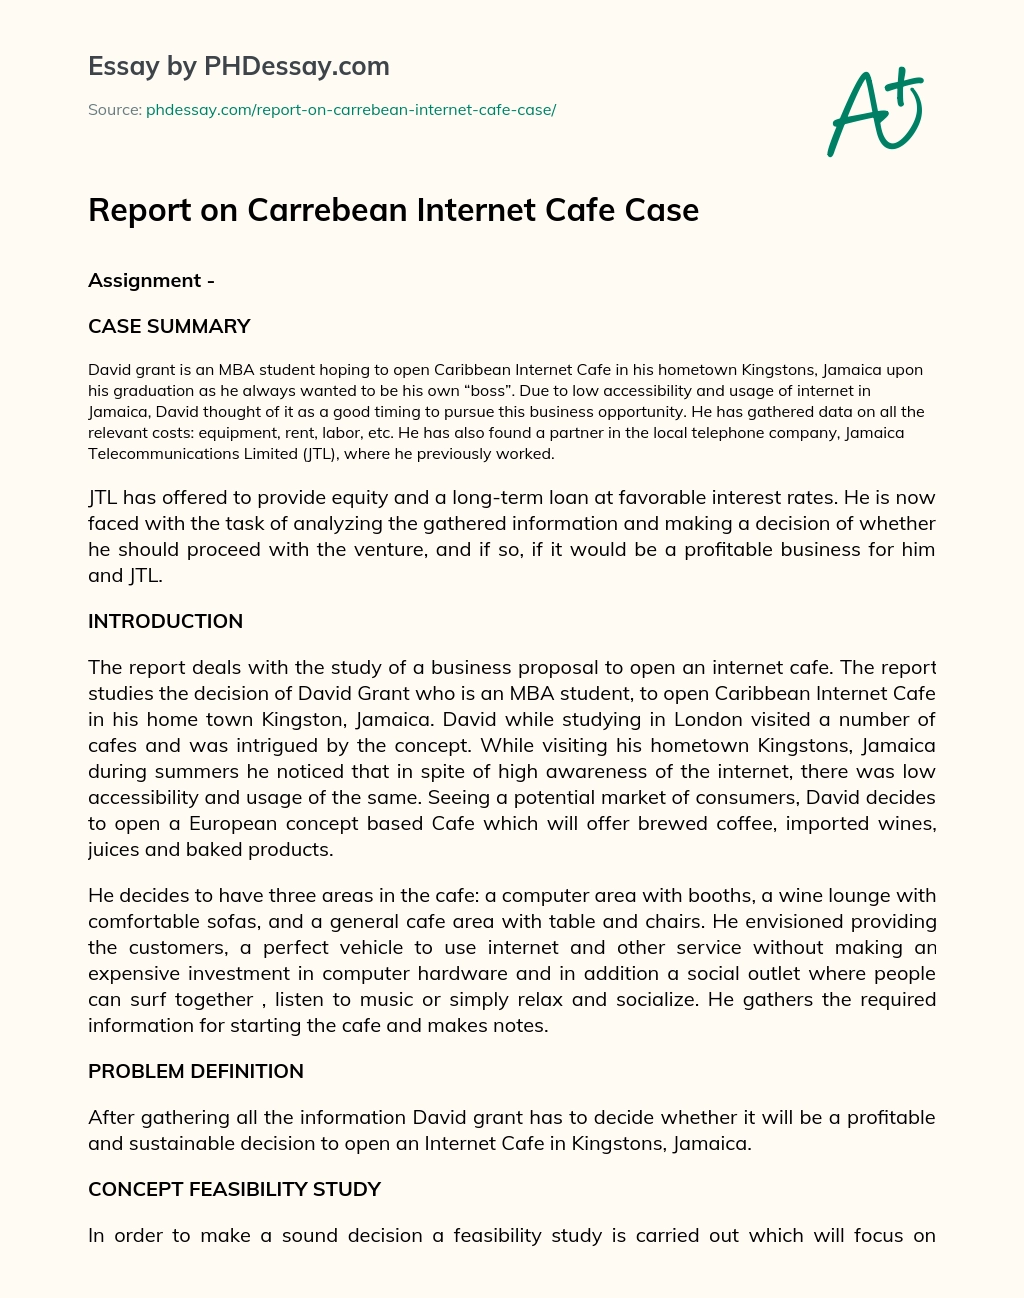 Report on Carrebean Internet Cafe Case essay